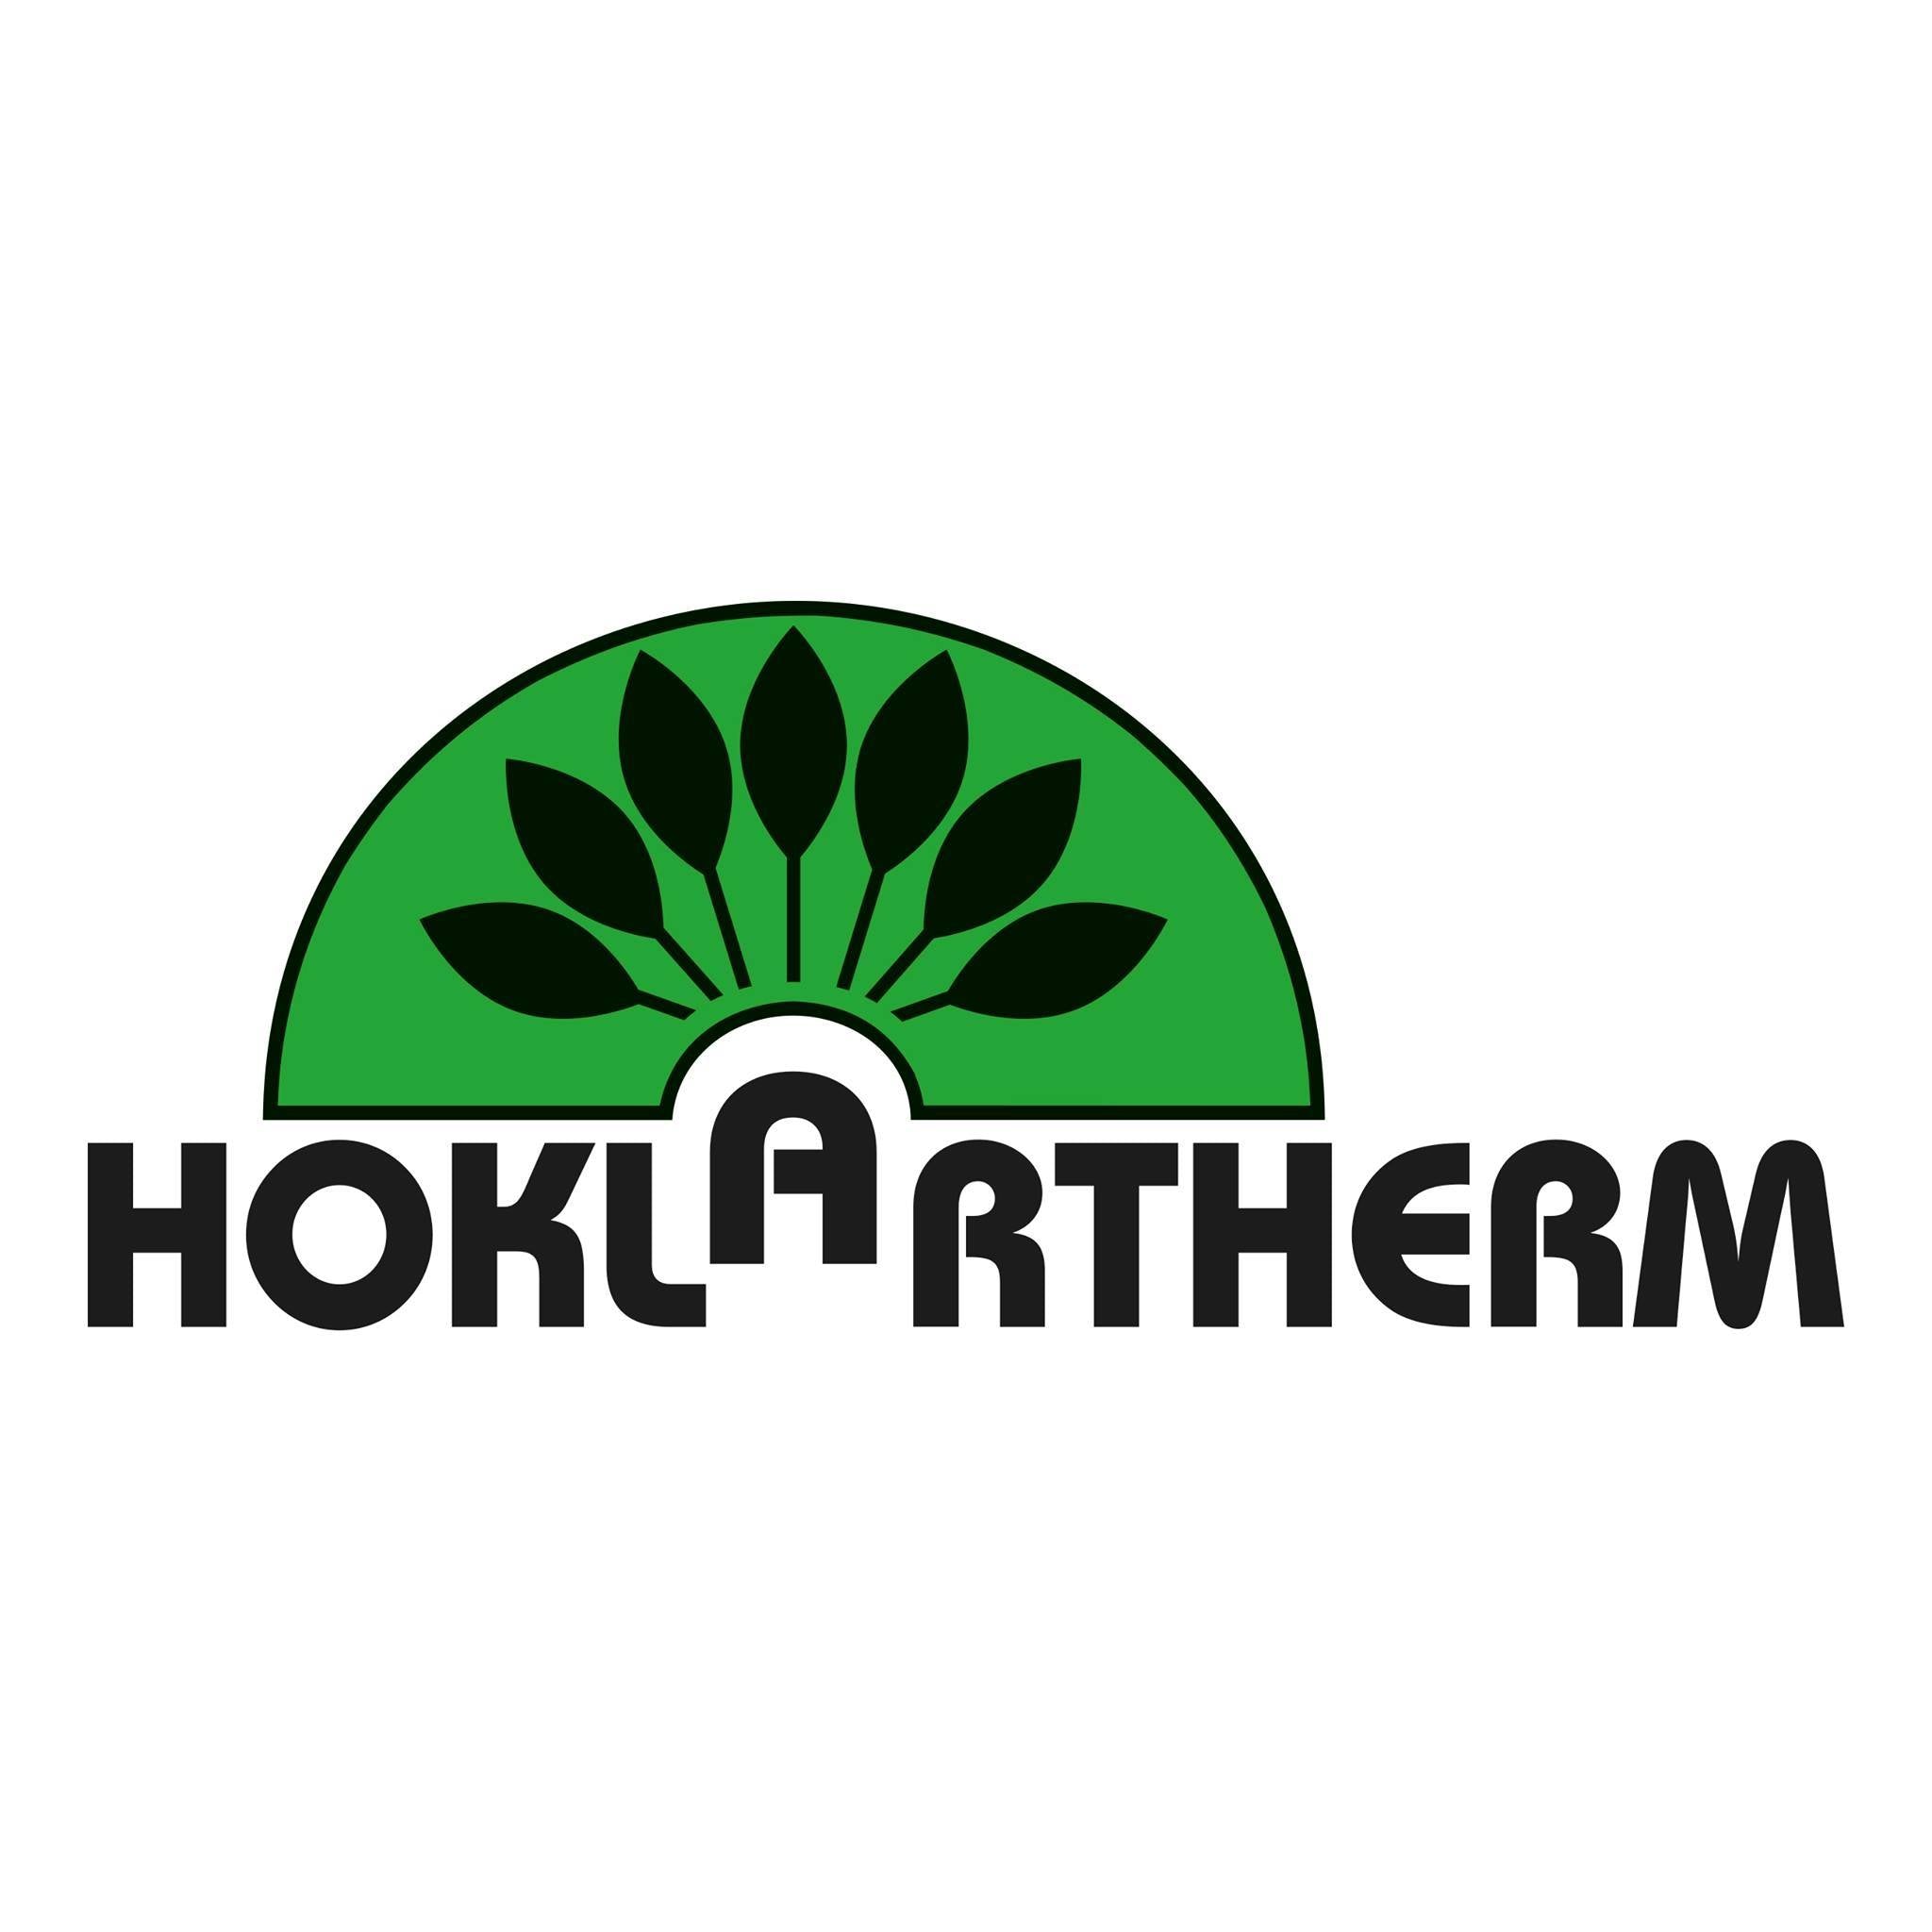 Hoklartherm